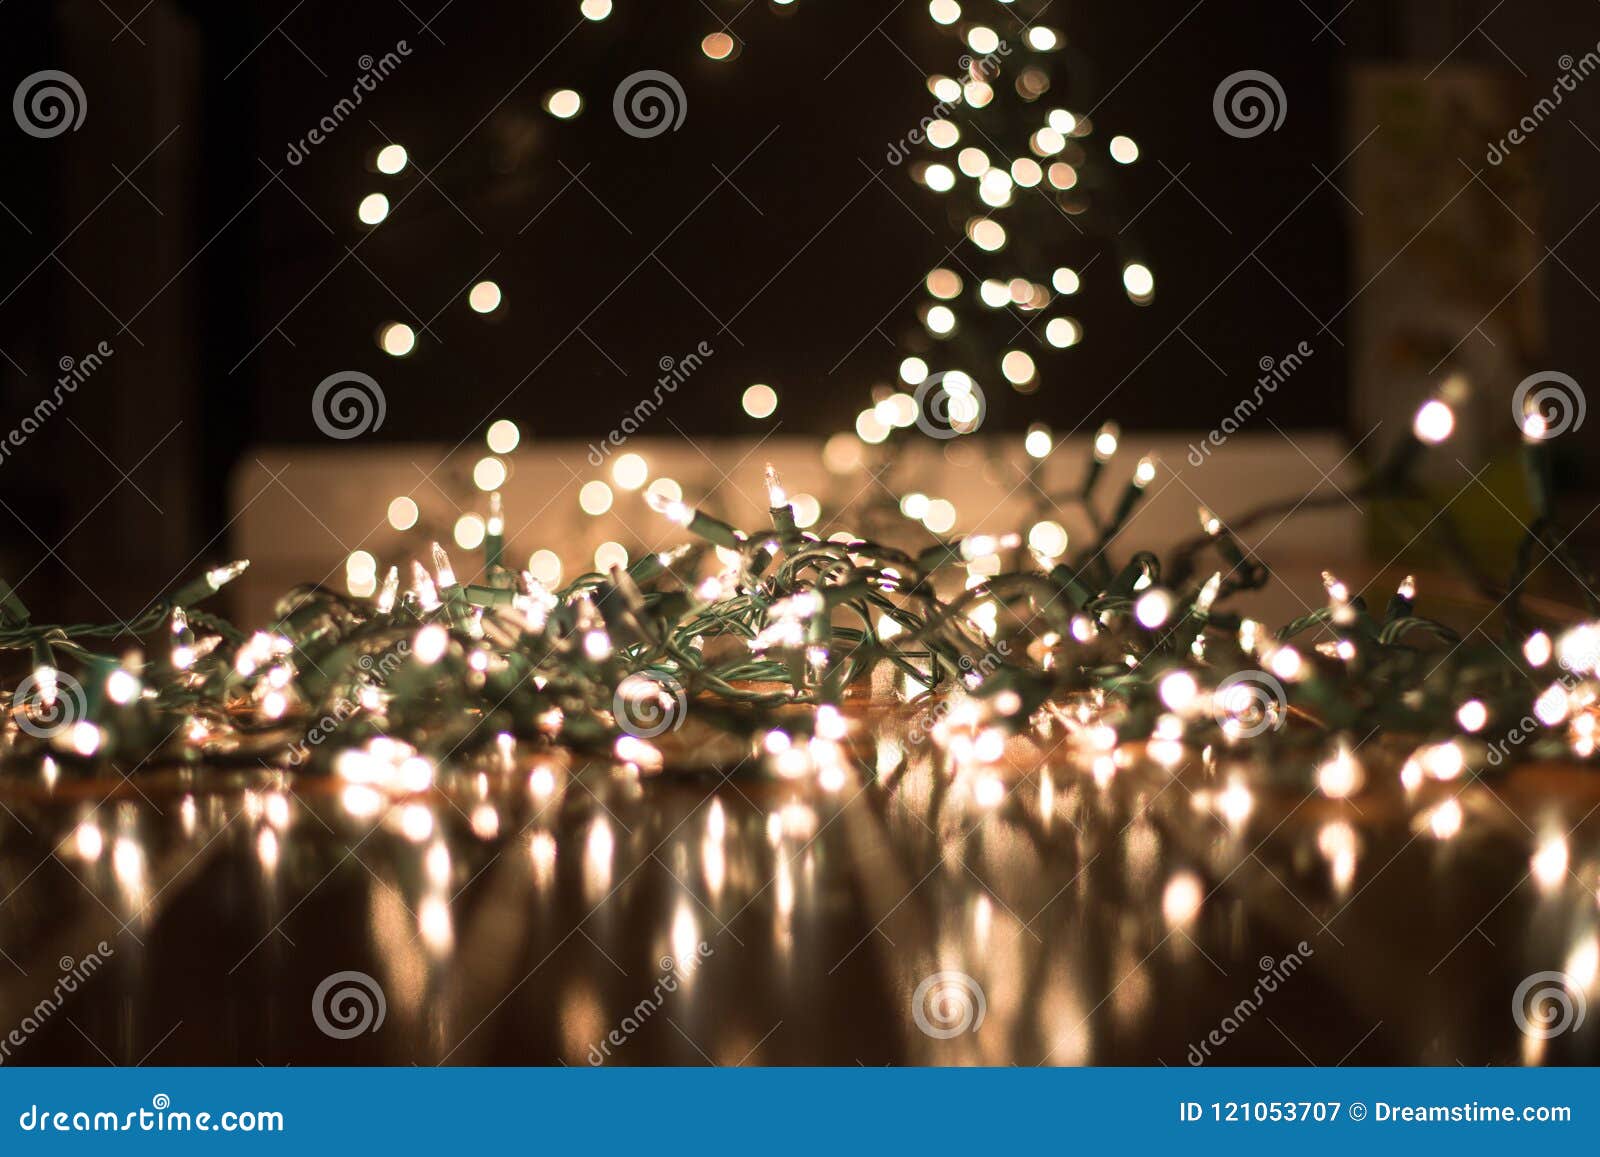 Background Blurred Christmas Lights on Floor for Portraits Stock Image -  Image of holidays, design: 121053707